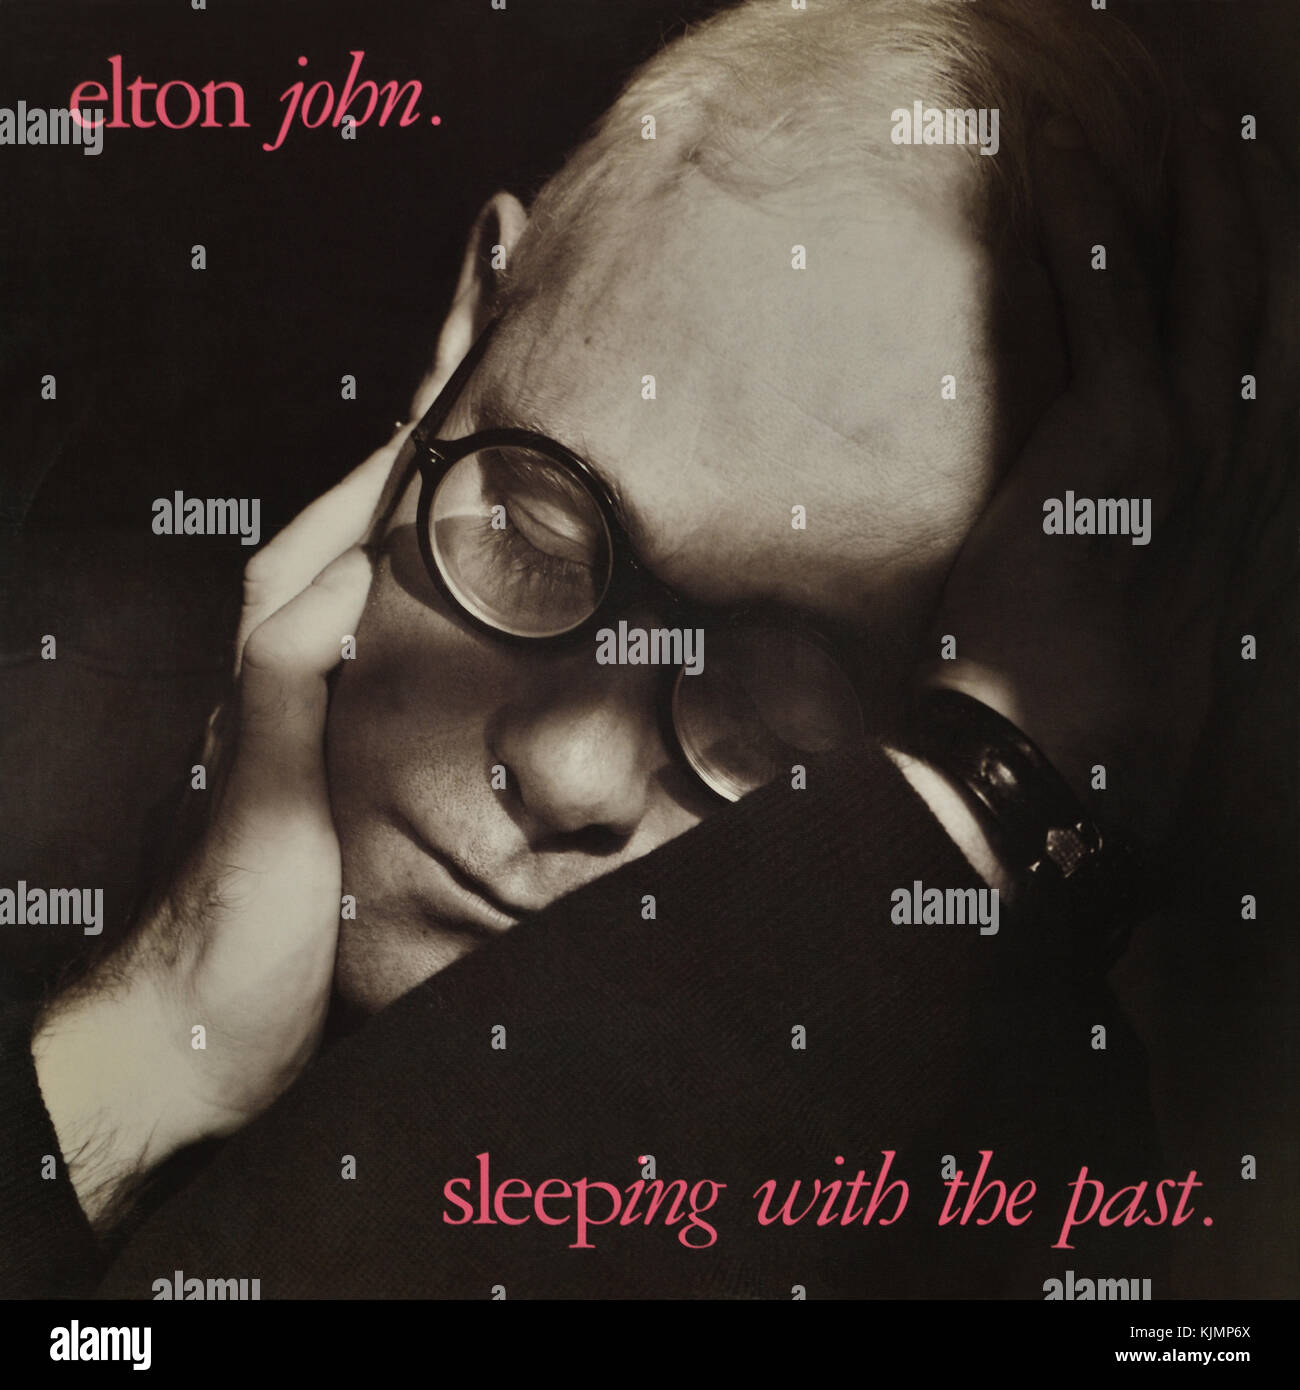 Elton John - copertina originale dell'album in vinile - Sleeping with the Past - 1989 Foto Stock